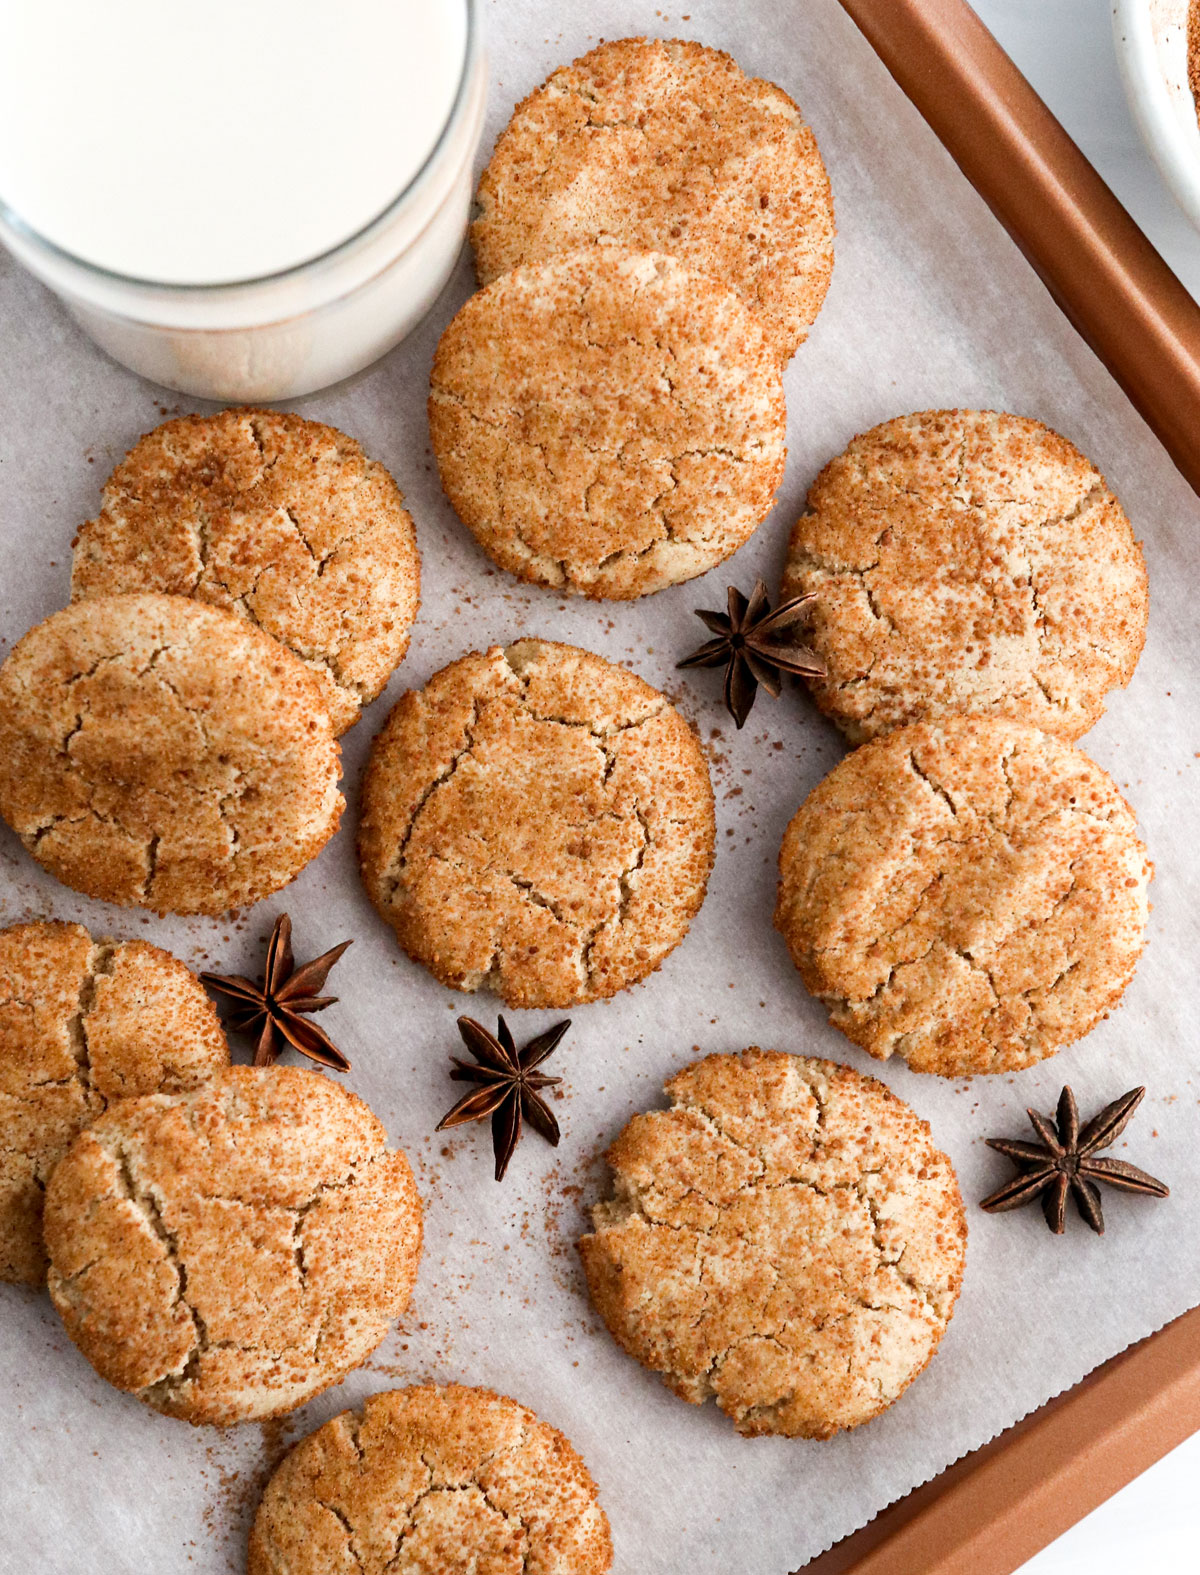 almond flour snickerdoodle cookies on baking sheet with milk